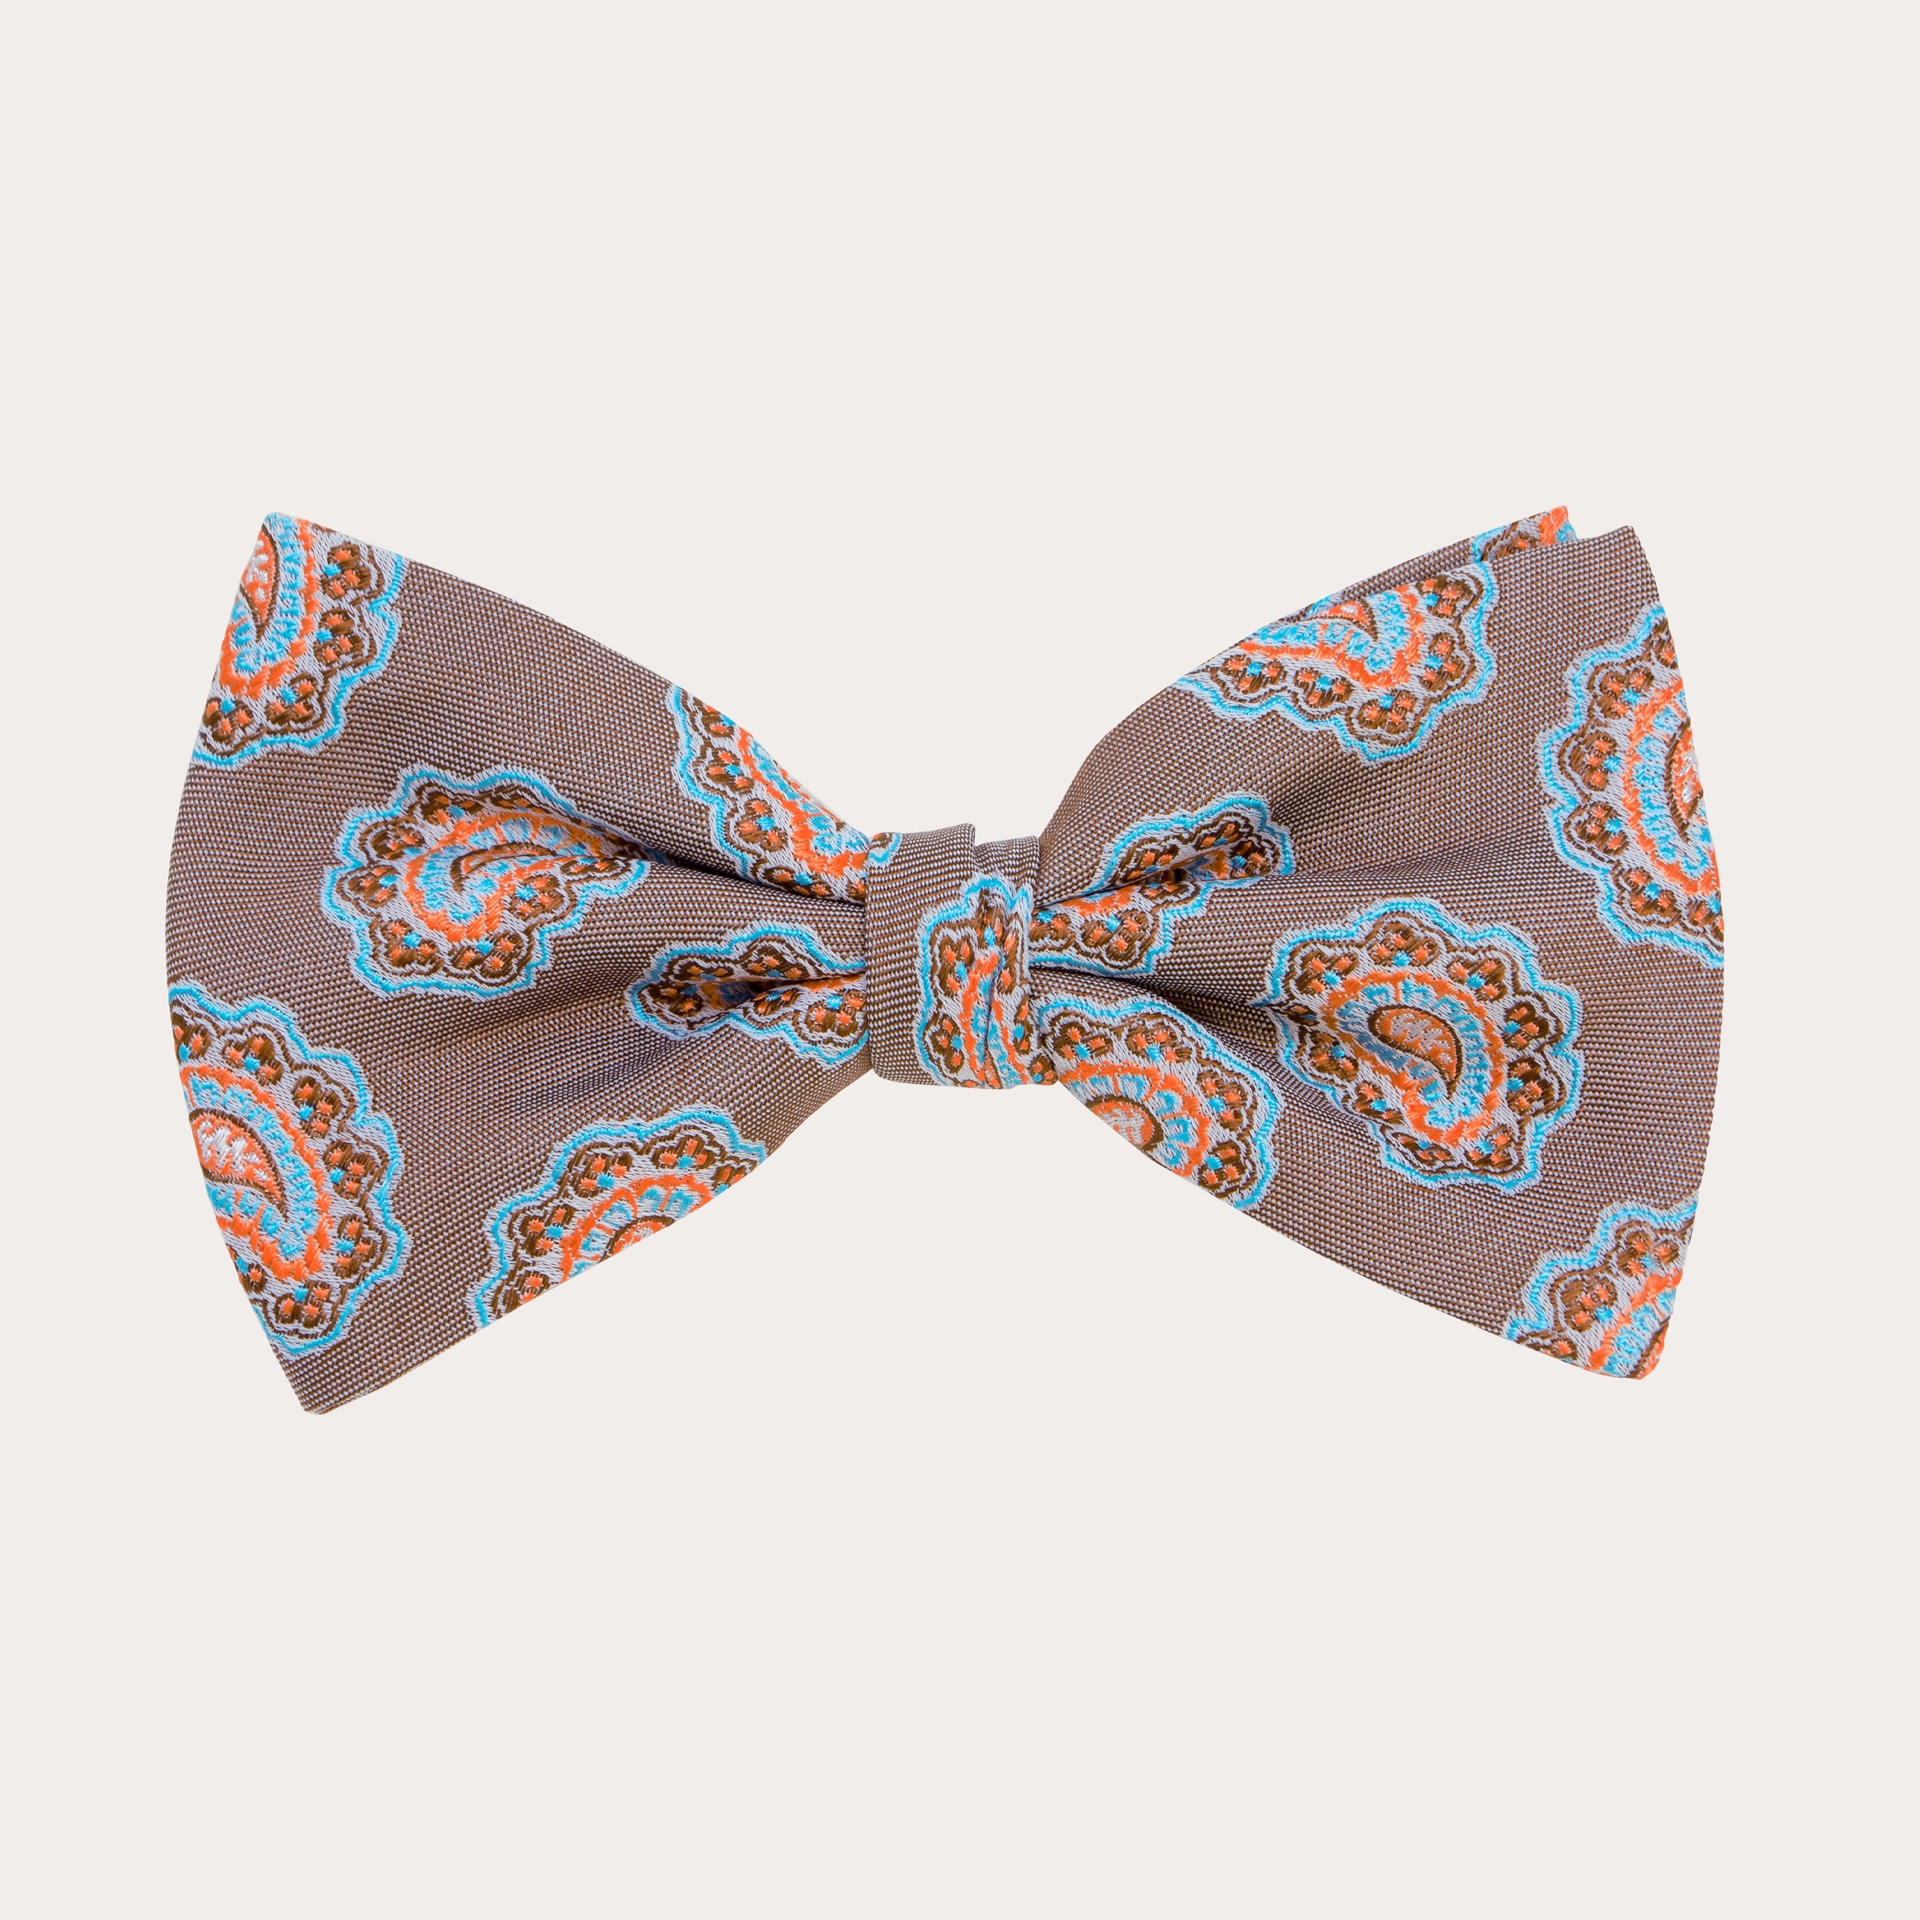 Original silk bow tie with paisley pattern, blue